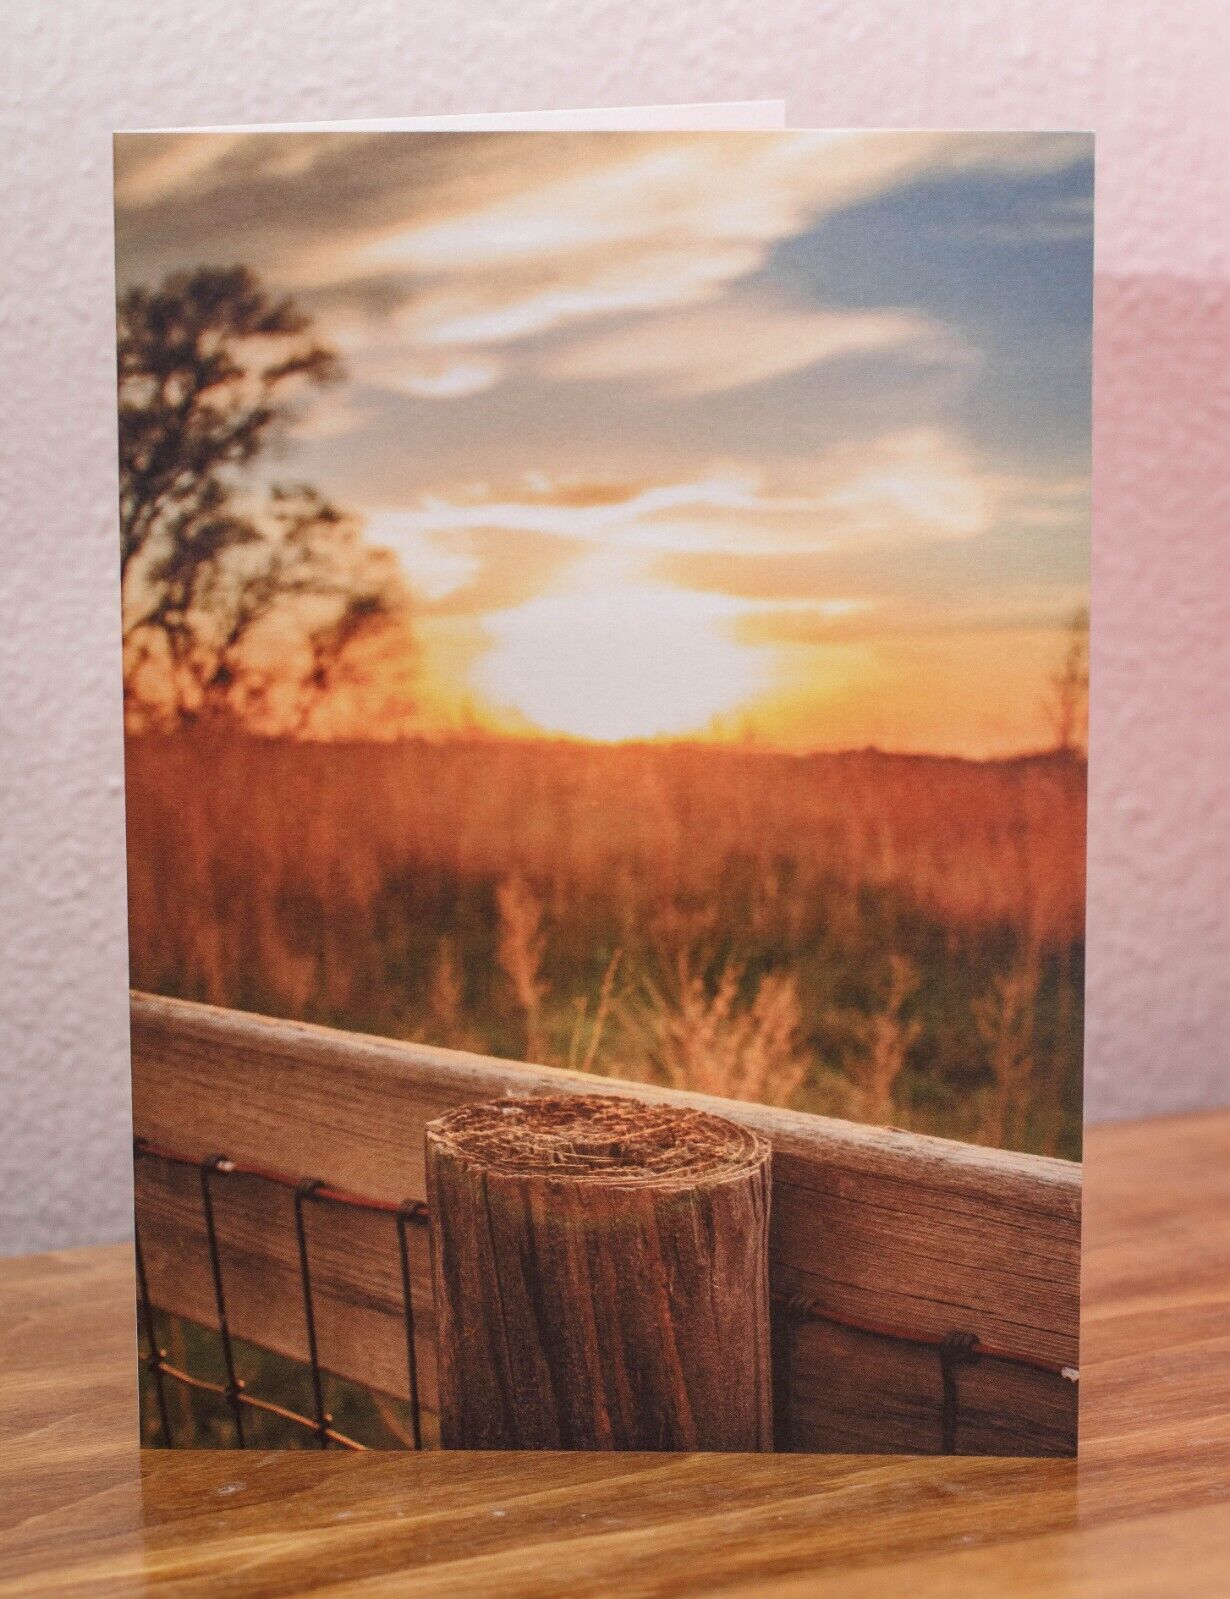 South Dakota SunsetLandscape-5x7 Folded Blank Greeting Cards-5Pack W/envelopes